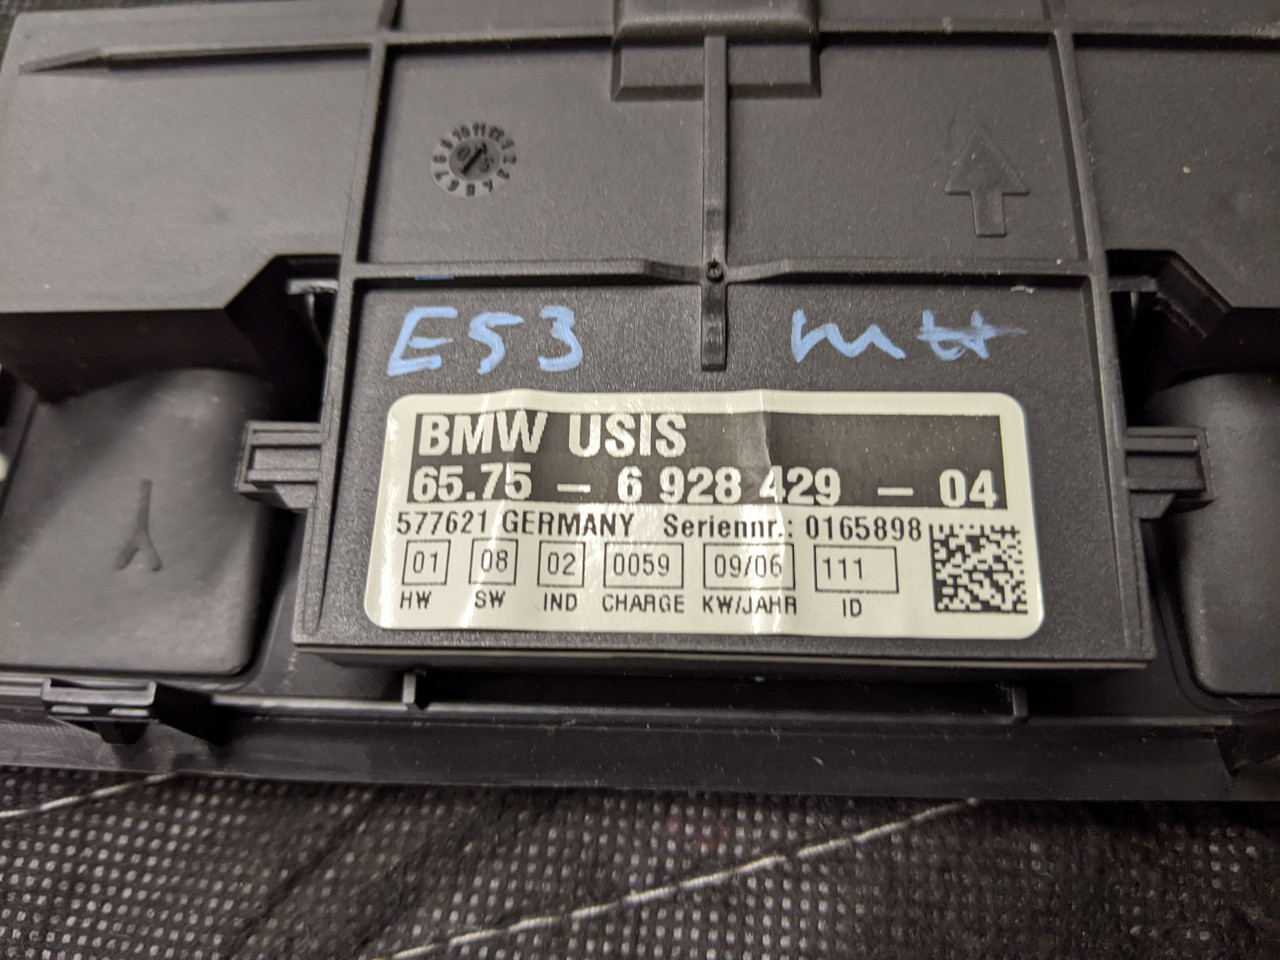 BMW E53 X5 Ultrasonic Alarm Module Black 65756928429